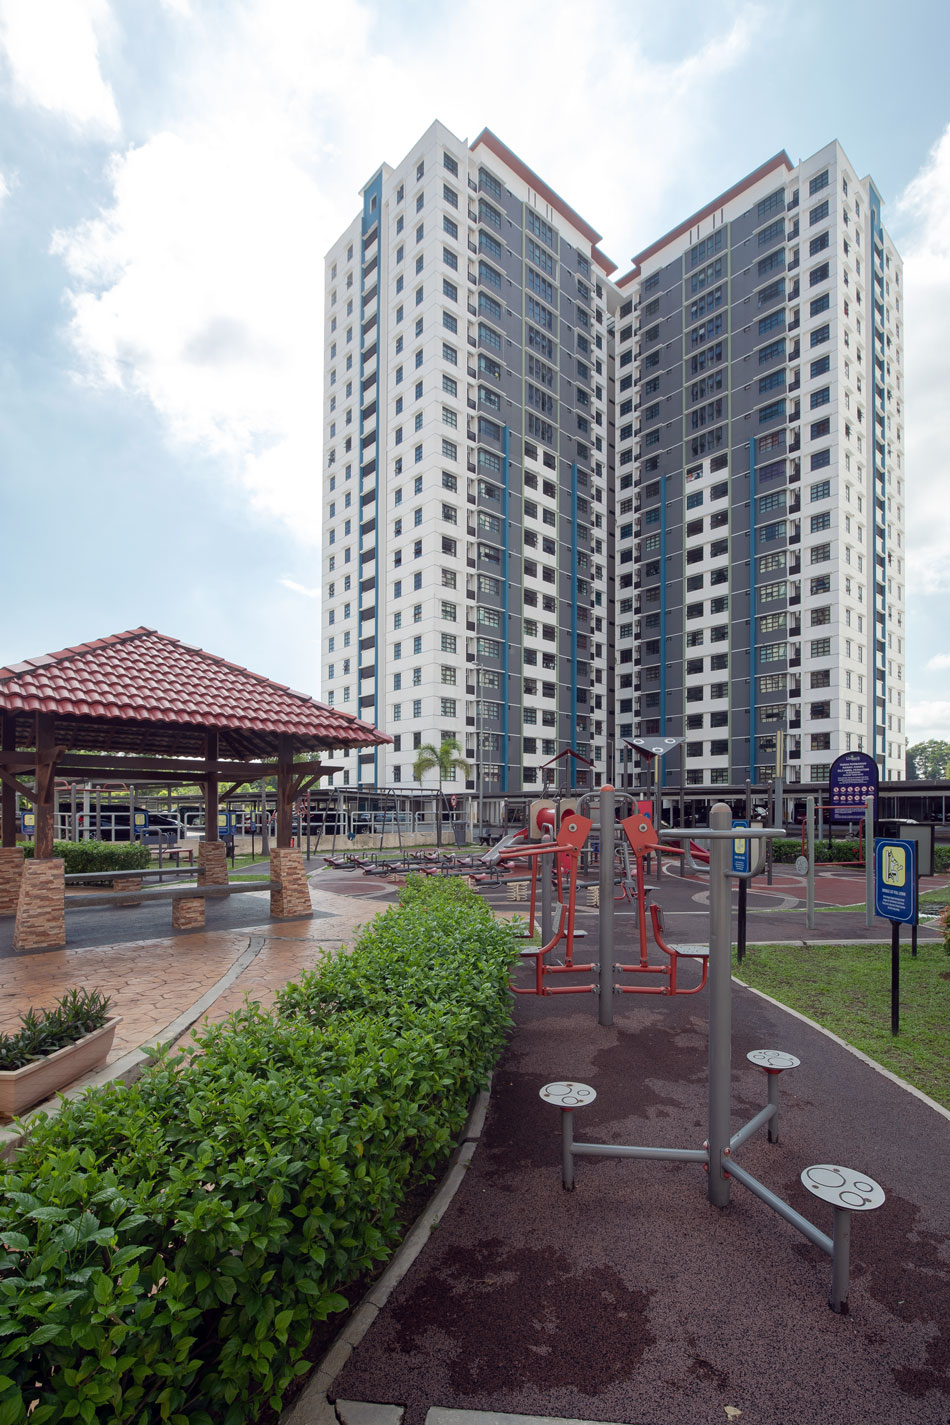 IUKL Residence @ Unipark Condo - Infrastructure University Kuala Lumpur